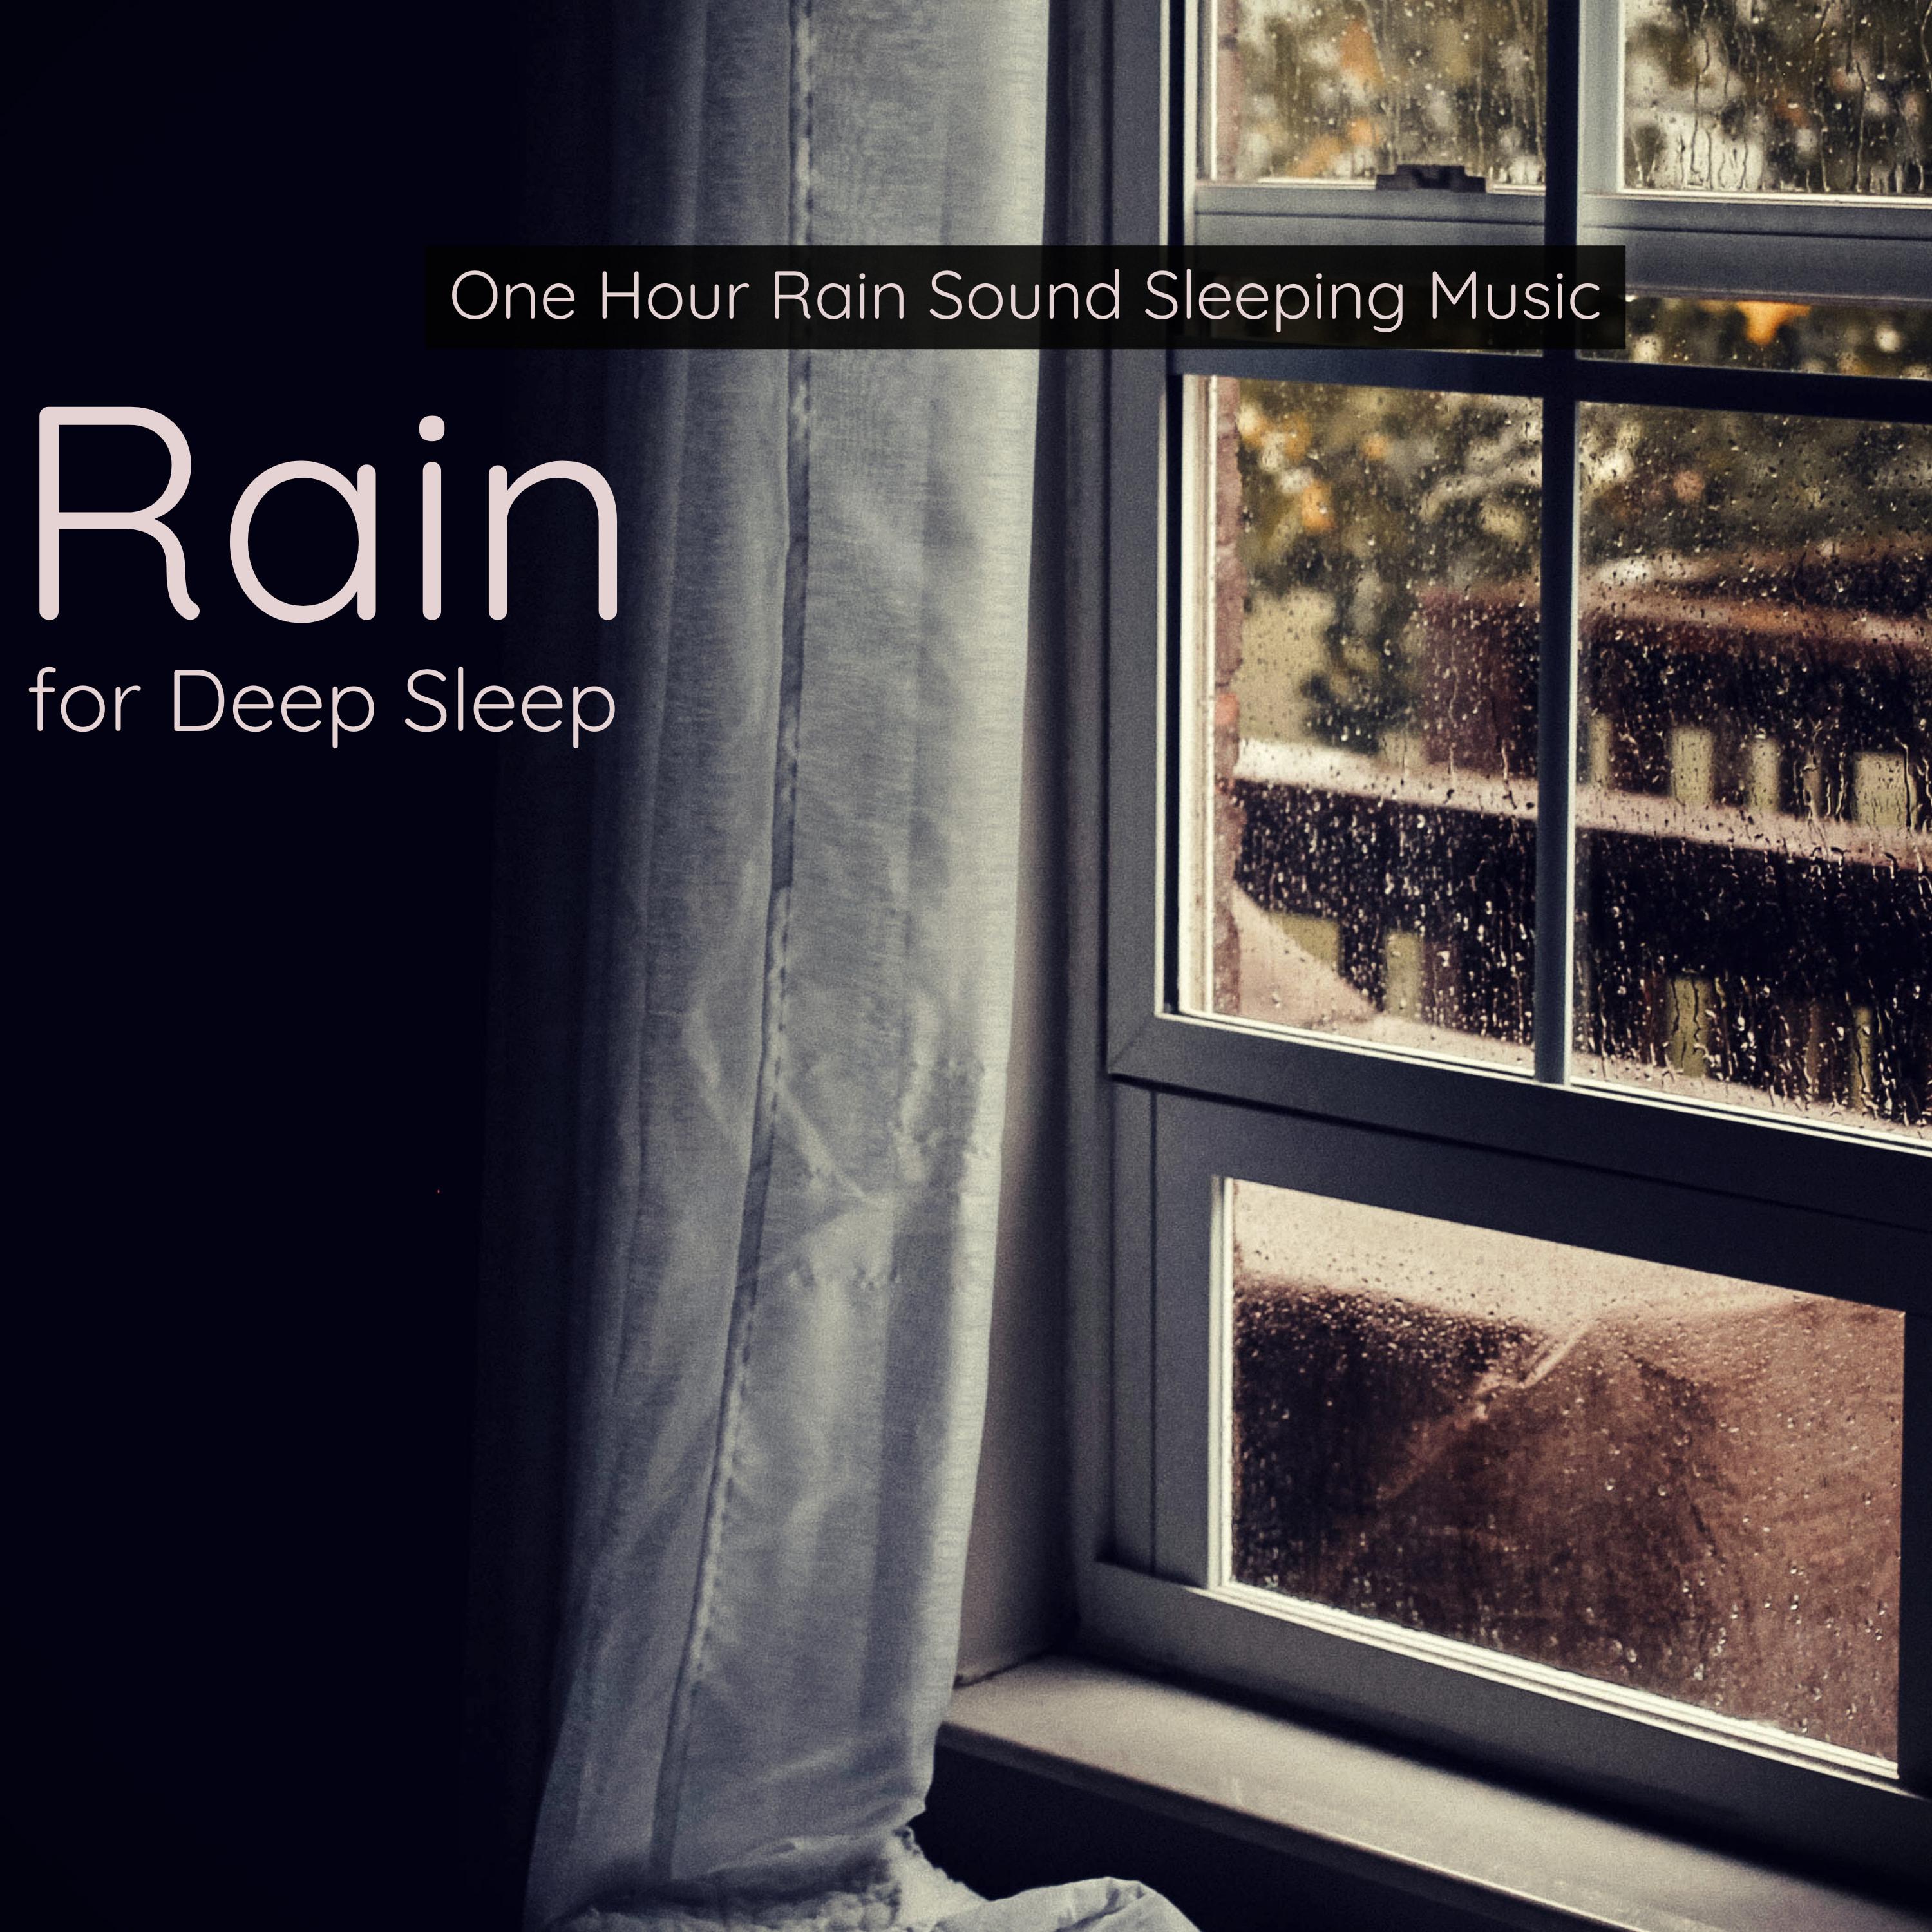 Rain for Deep Sleep - One Hour Rain Sound Sleeping Music